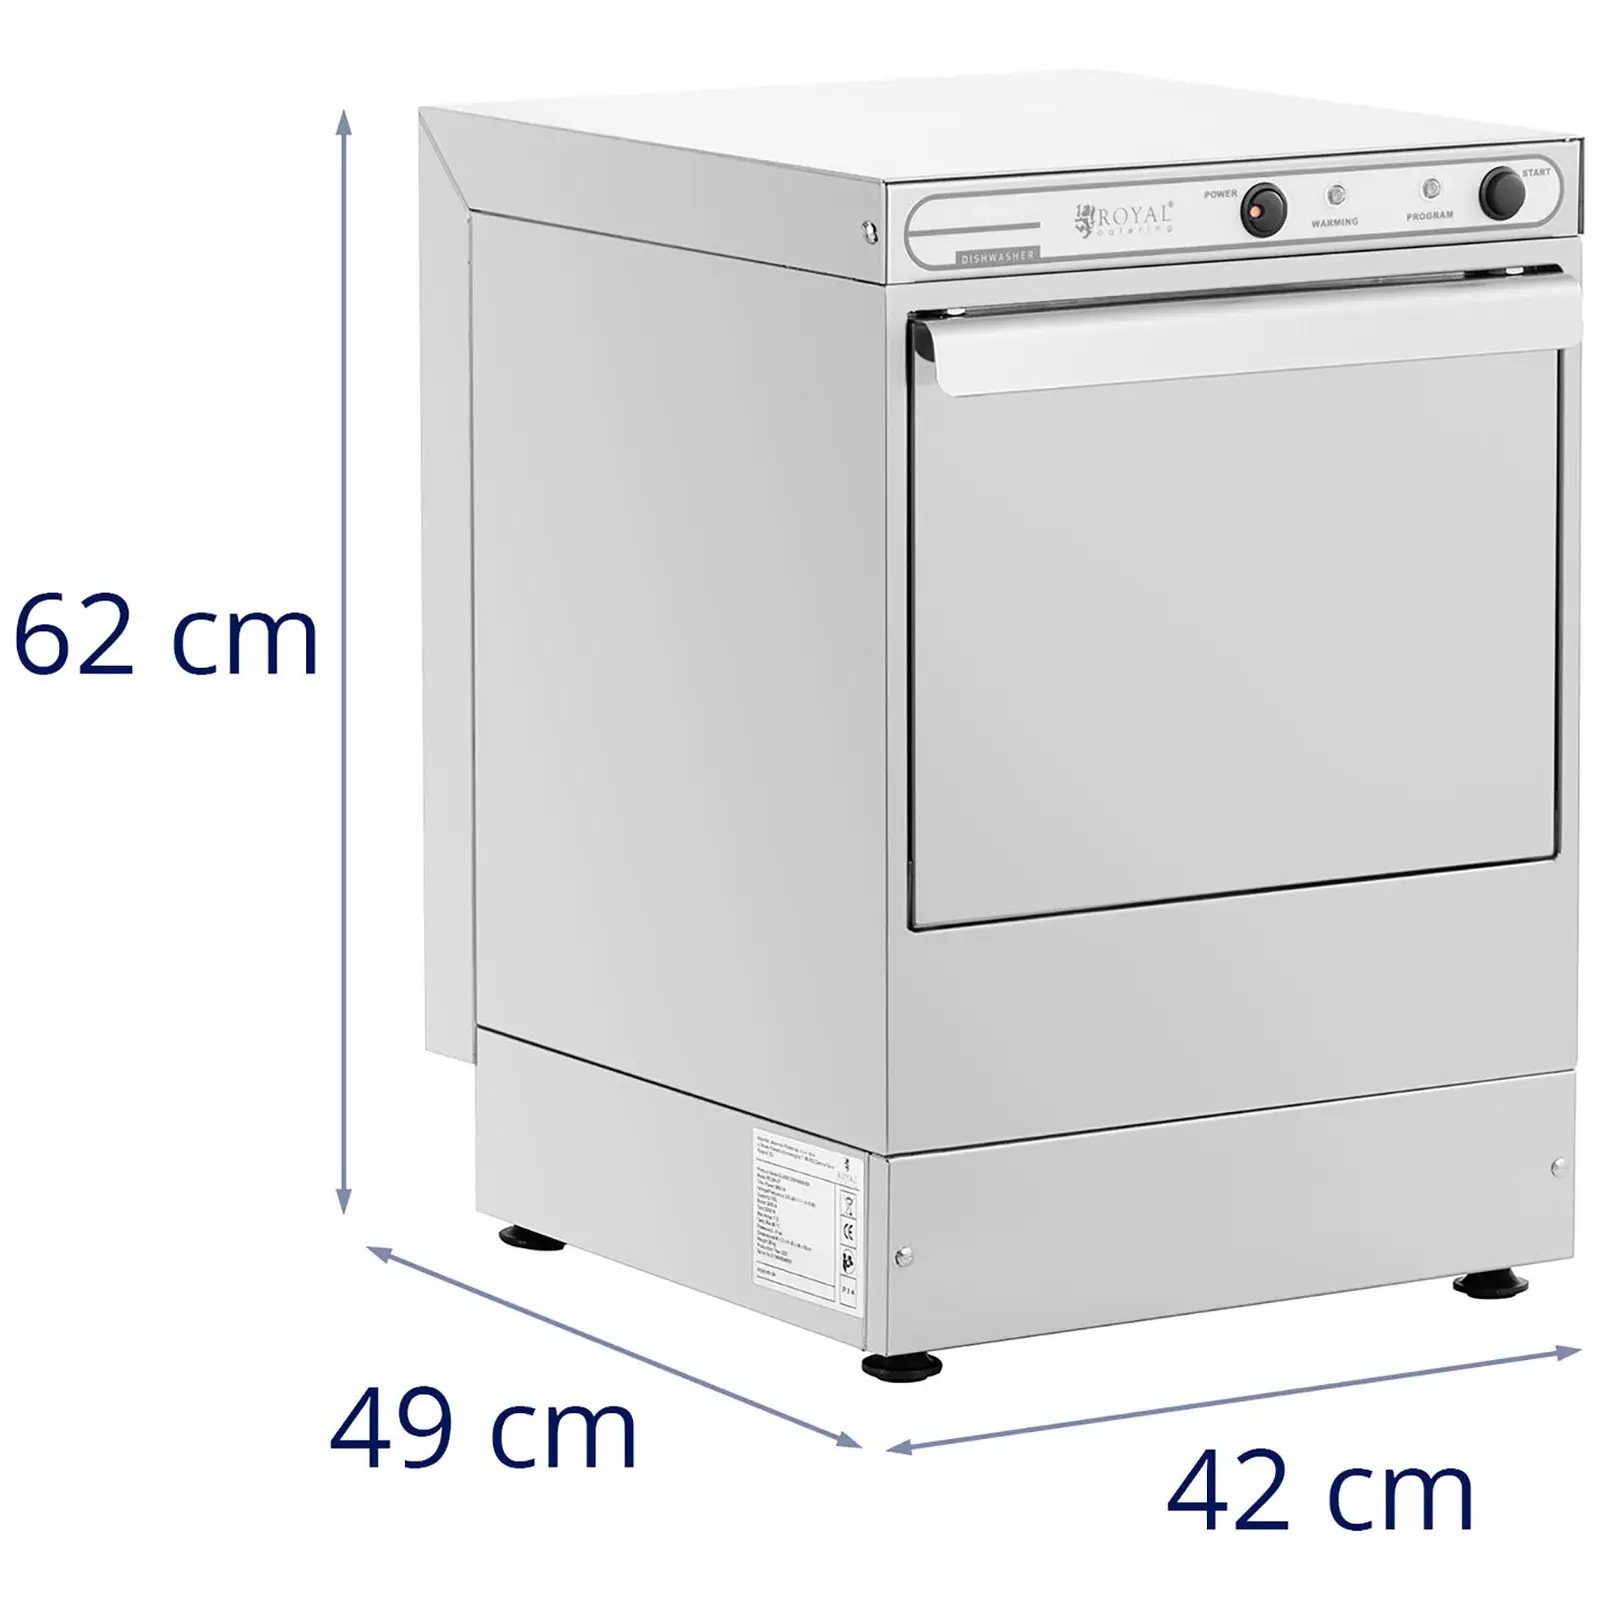 Industriopvaskemaskine - 2600 W - Royal Catering - rustfrit stål